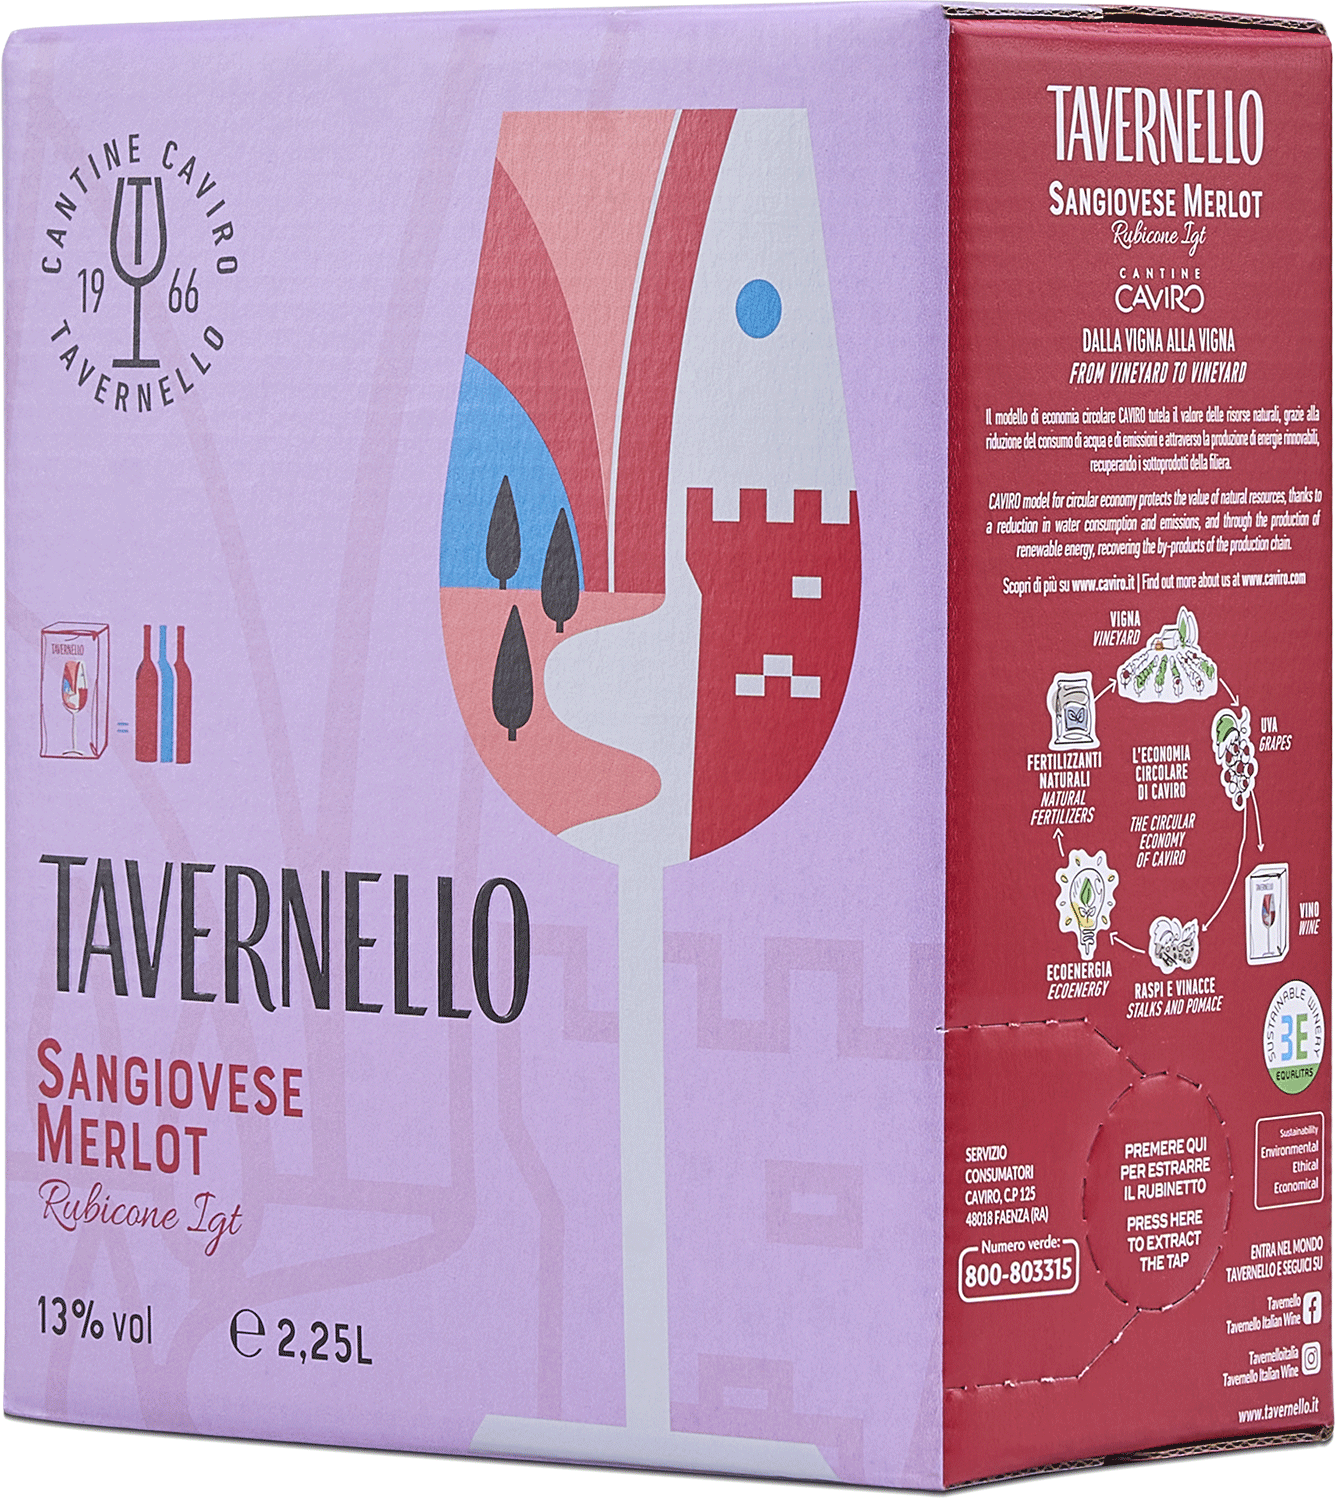 Tavernello Sangiovese Merlot Rubicone Igt 2,25 L